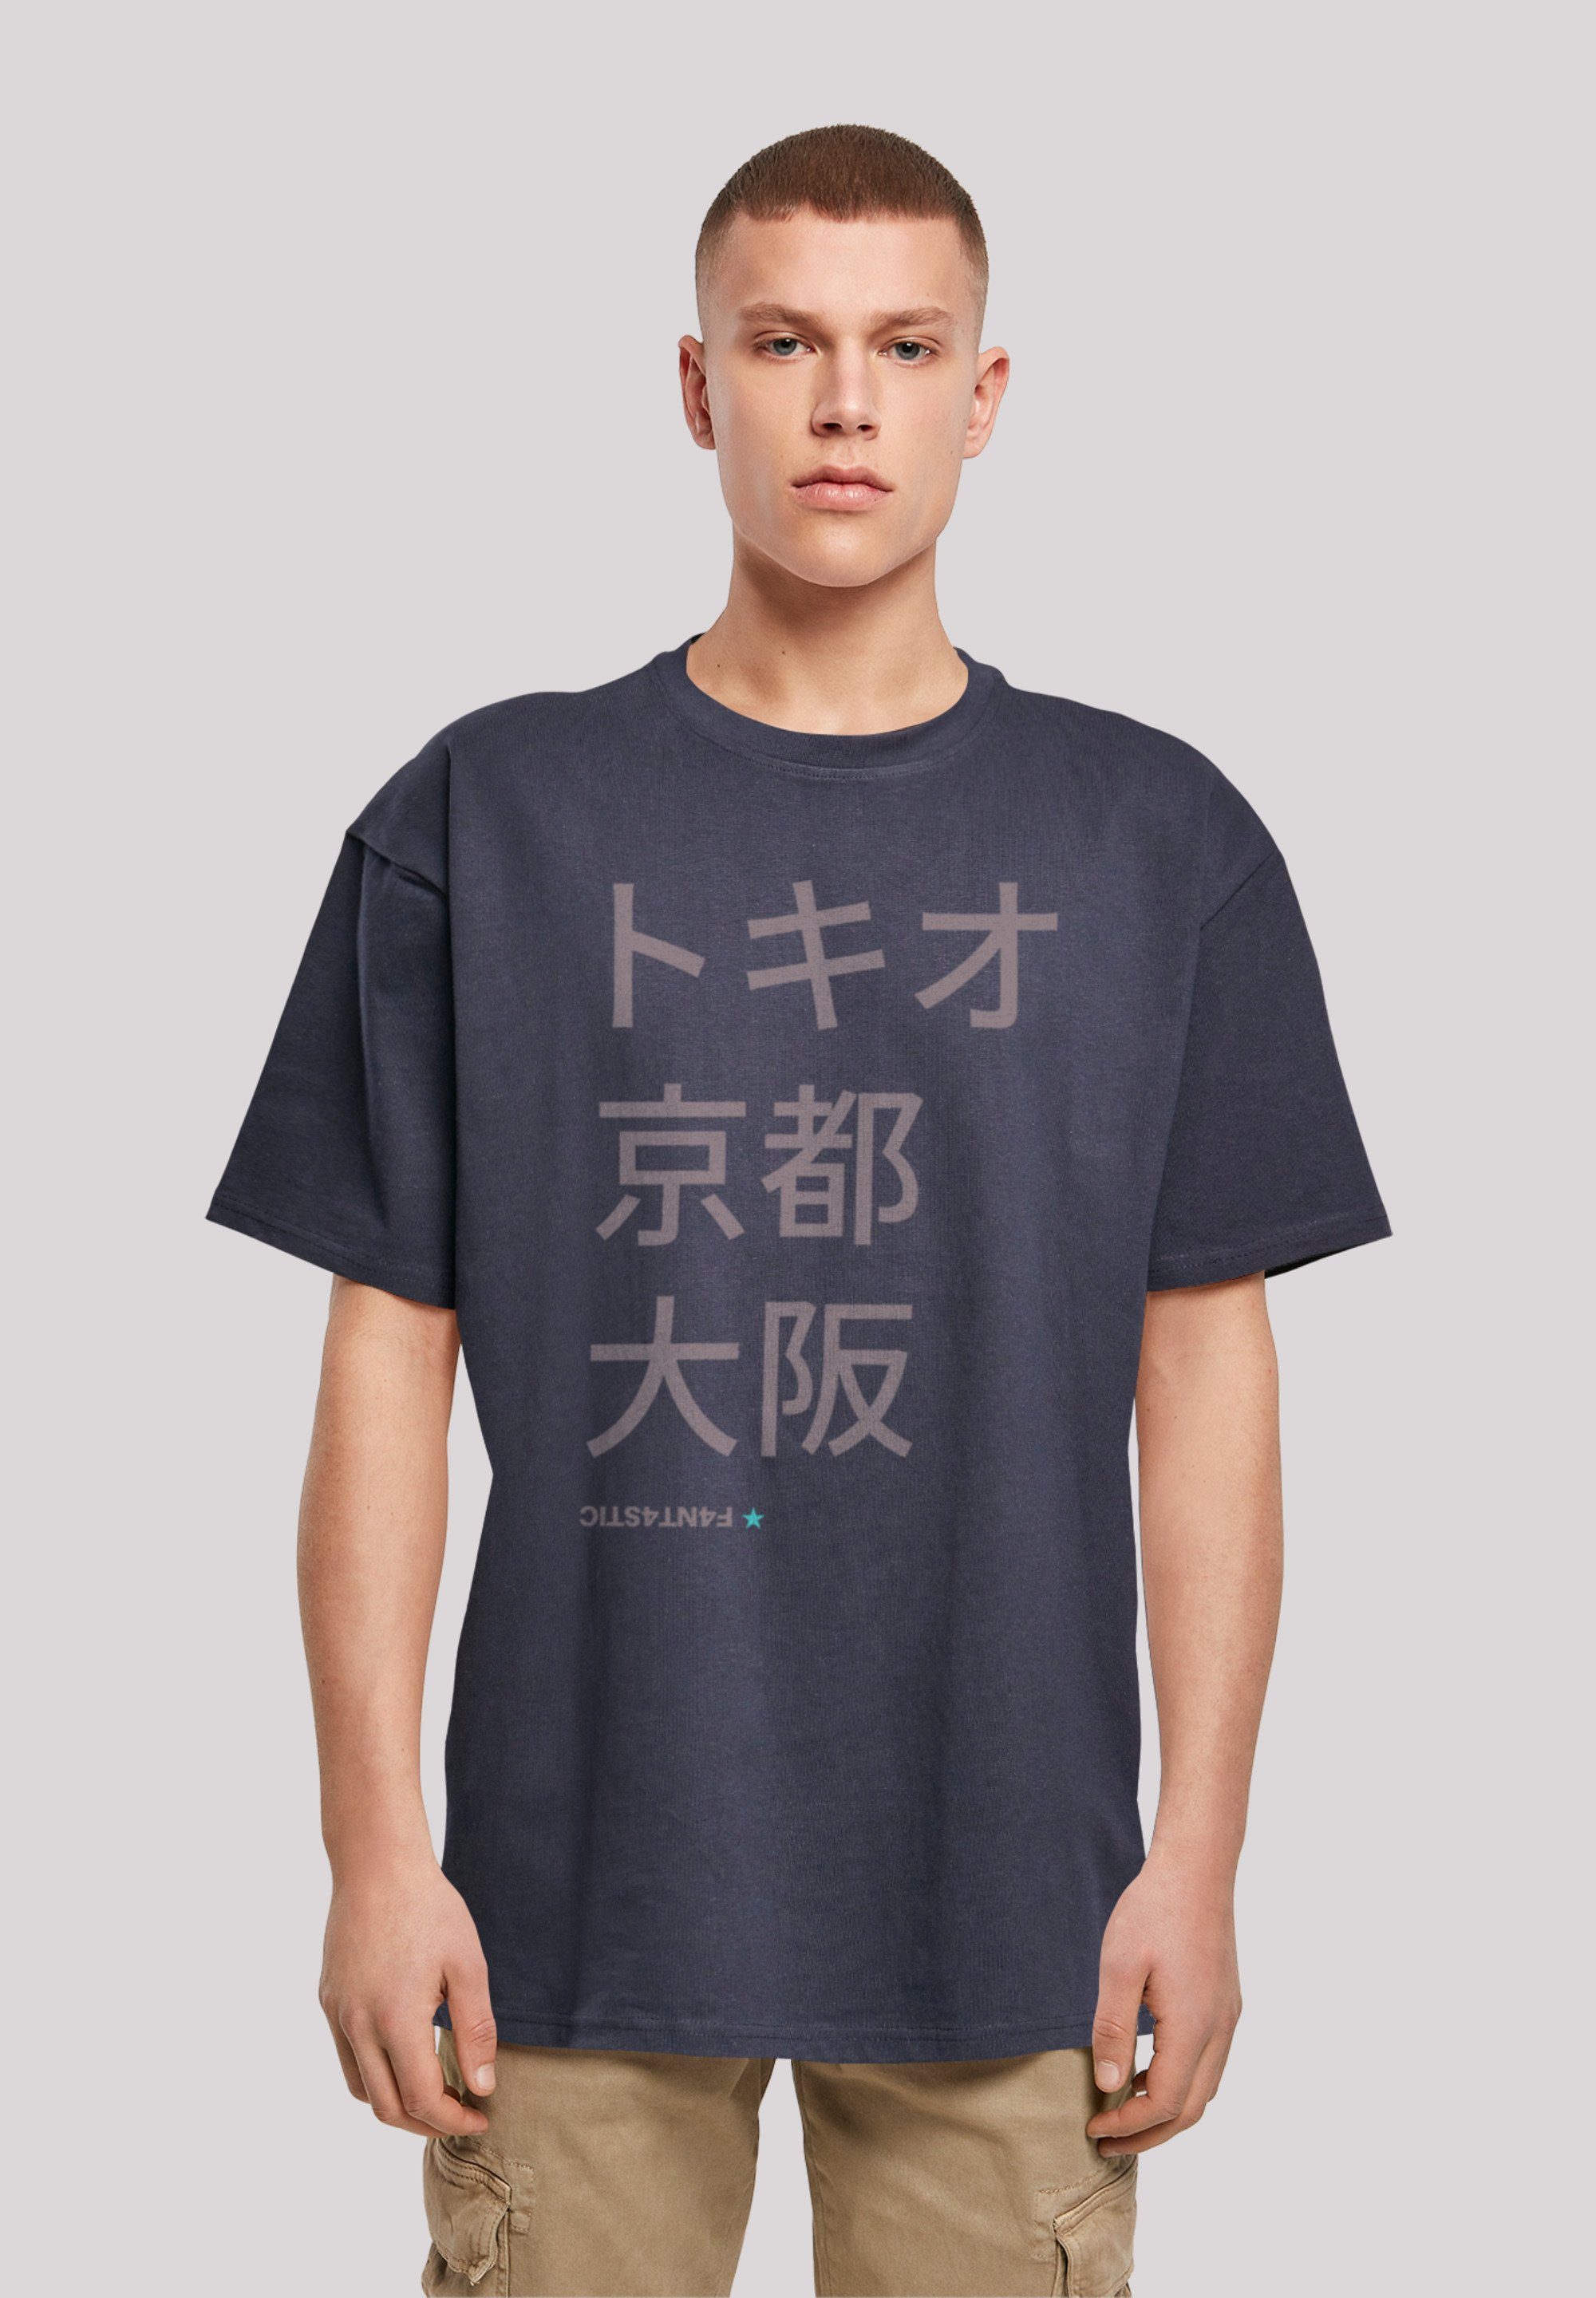 F4NT4STIC T-Shirt Print Osaka Kyoto, Tokio